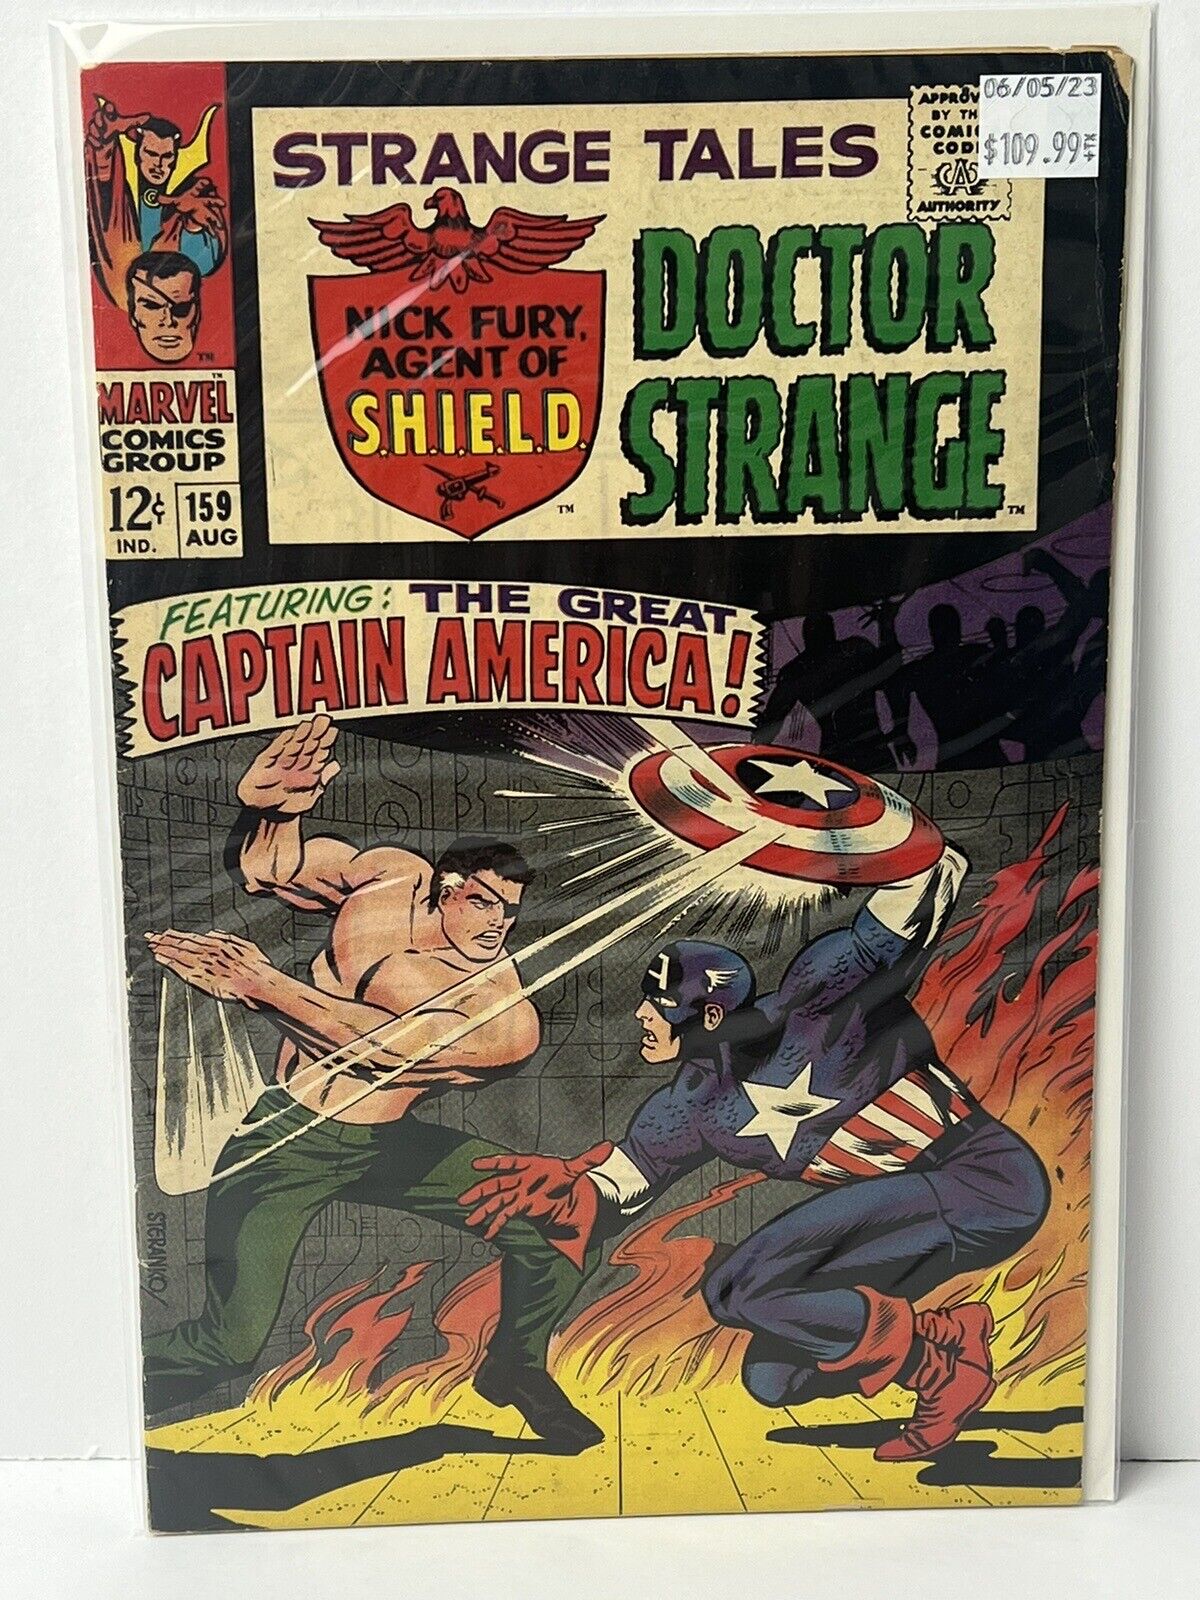 Nick Fury Agent Of Shield, Doctor Strange  #159 Marvel Comics 1967 Silver Age